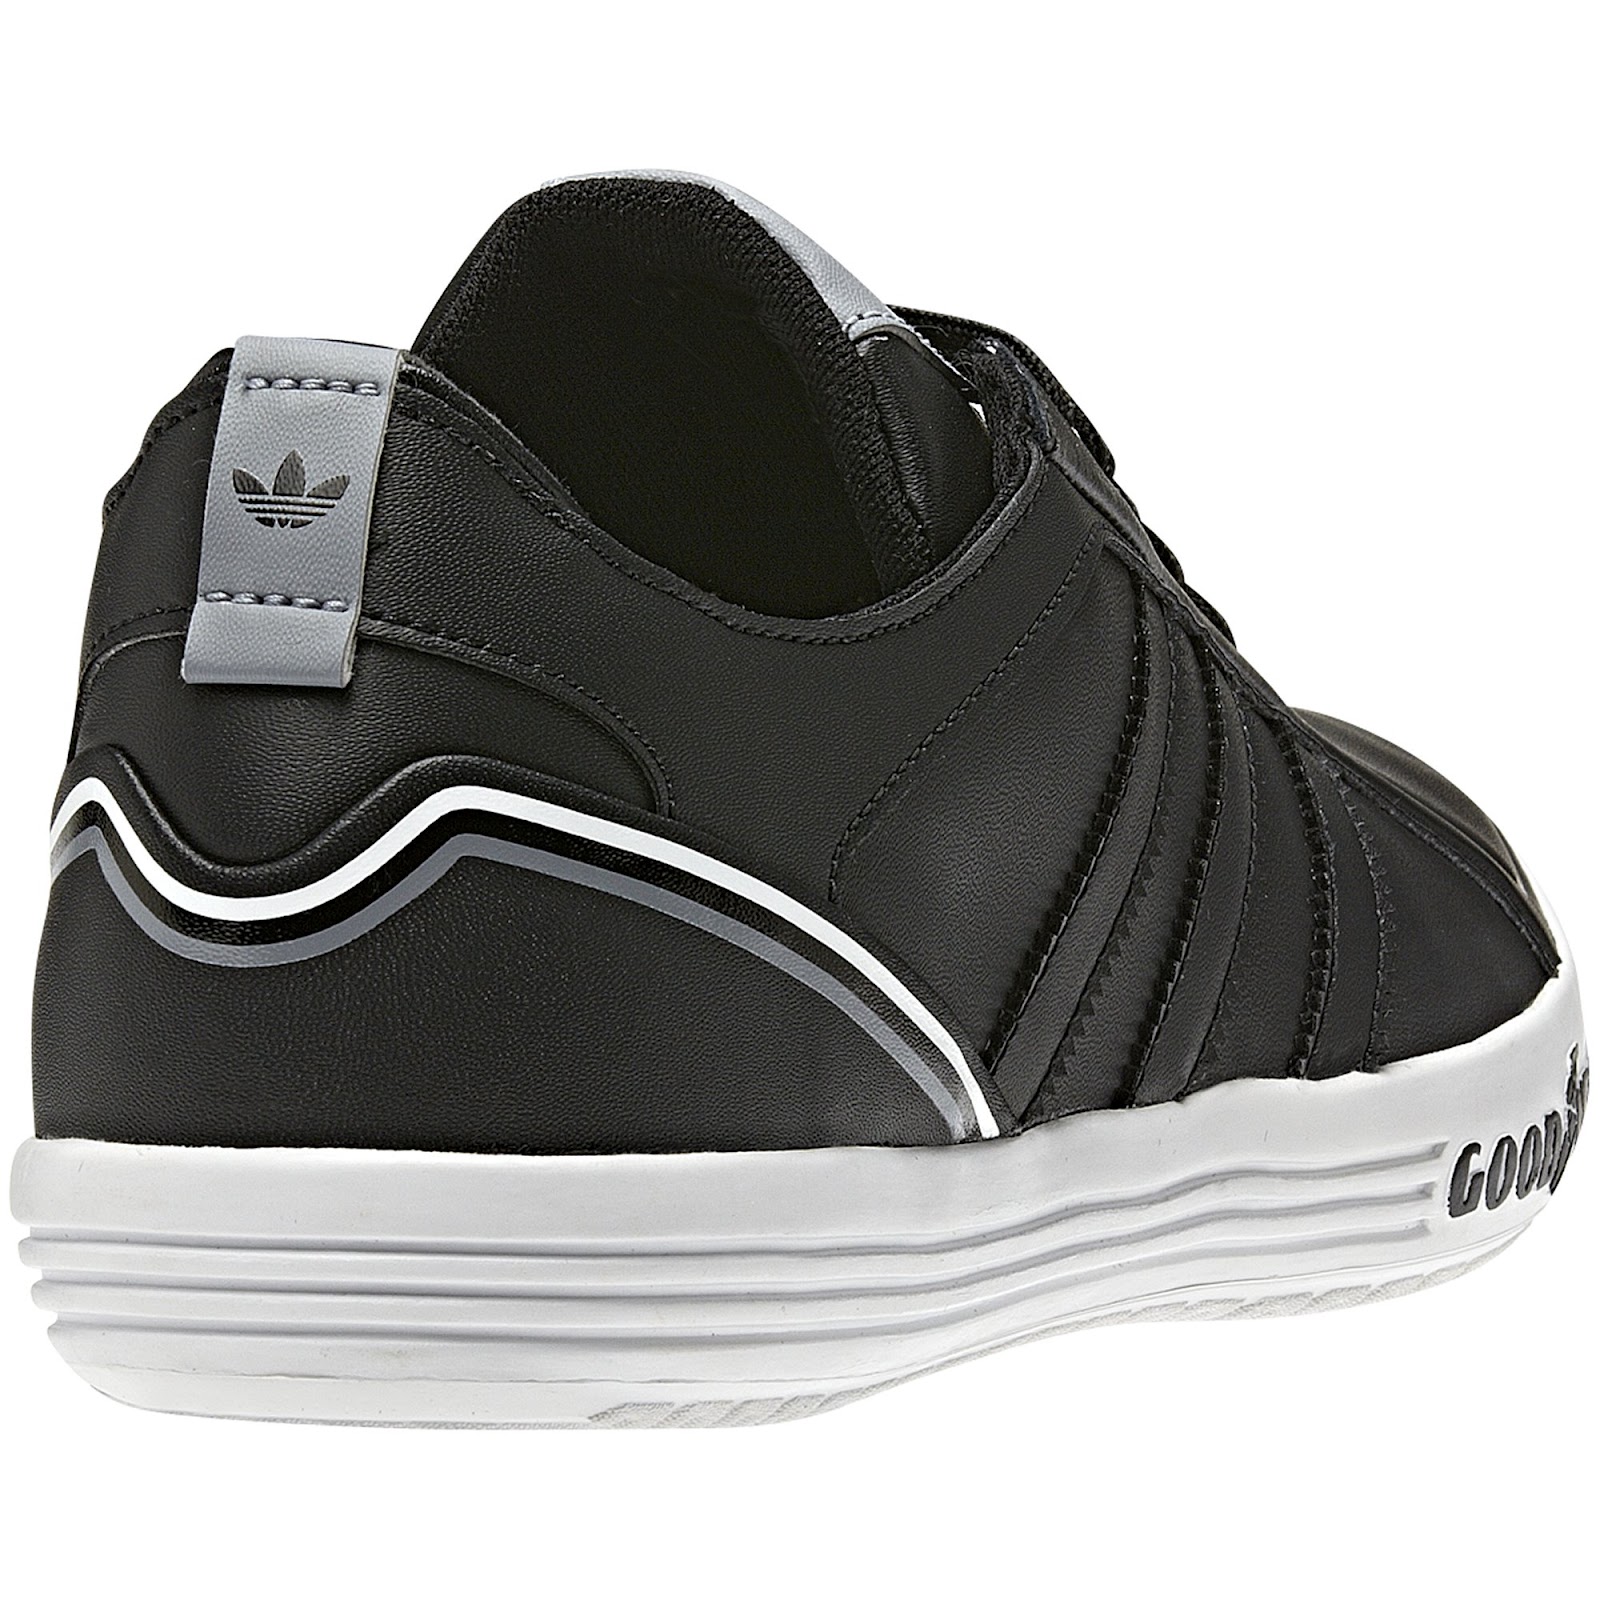 Adidas Goodyear Shoes